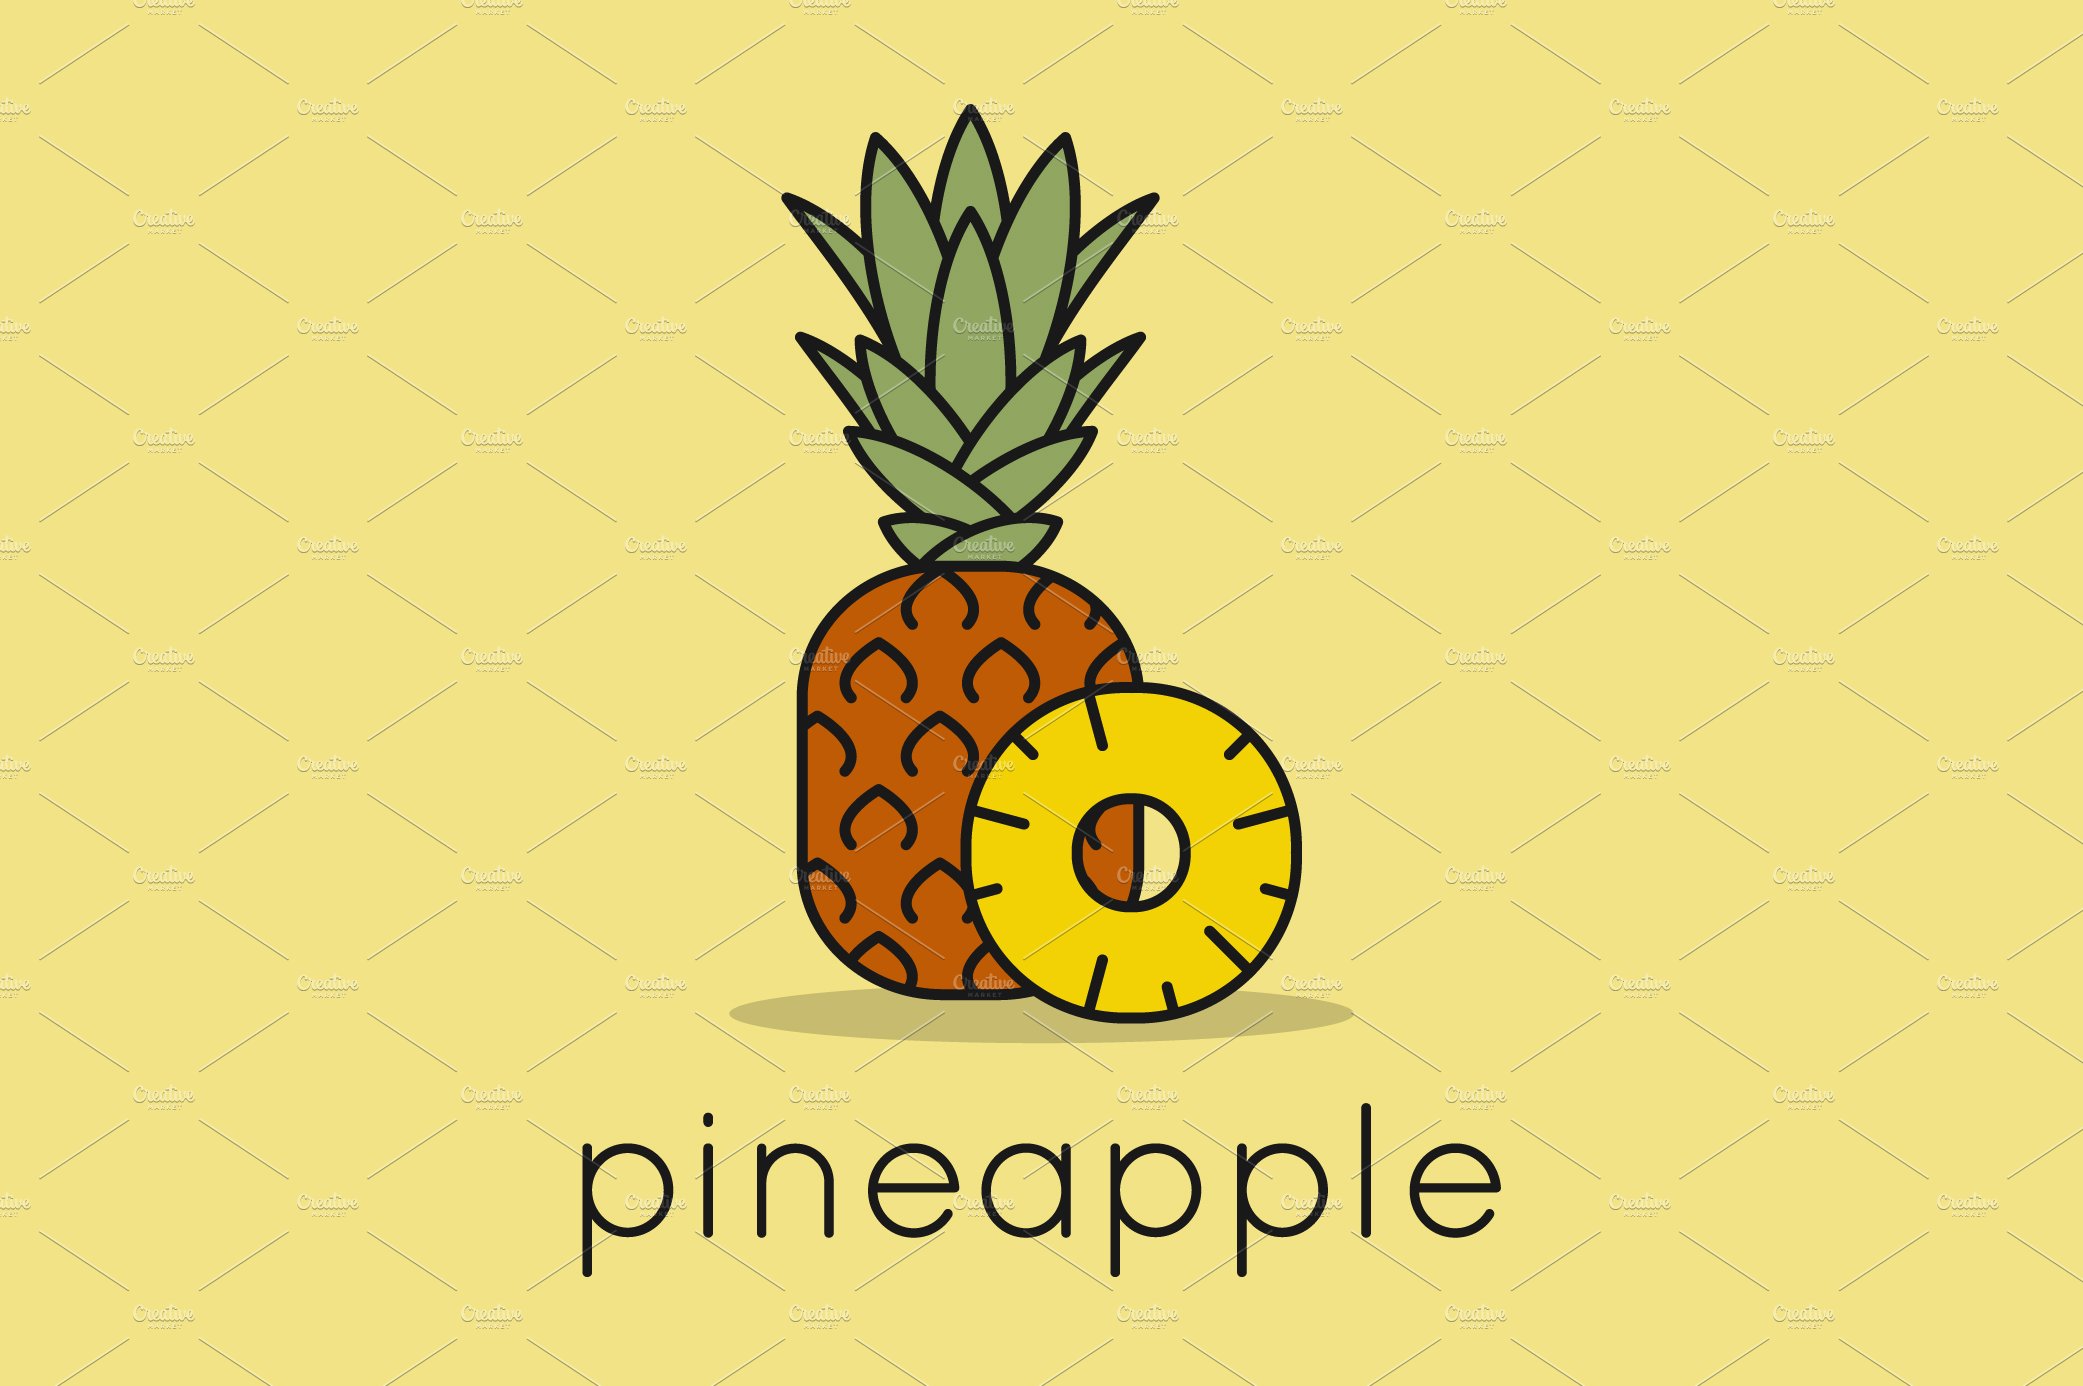 Pineapple fruit logo. cover image.